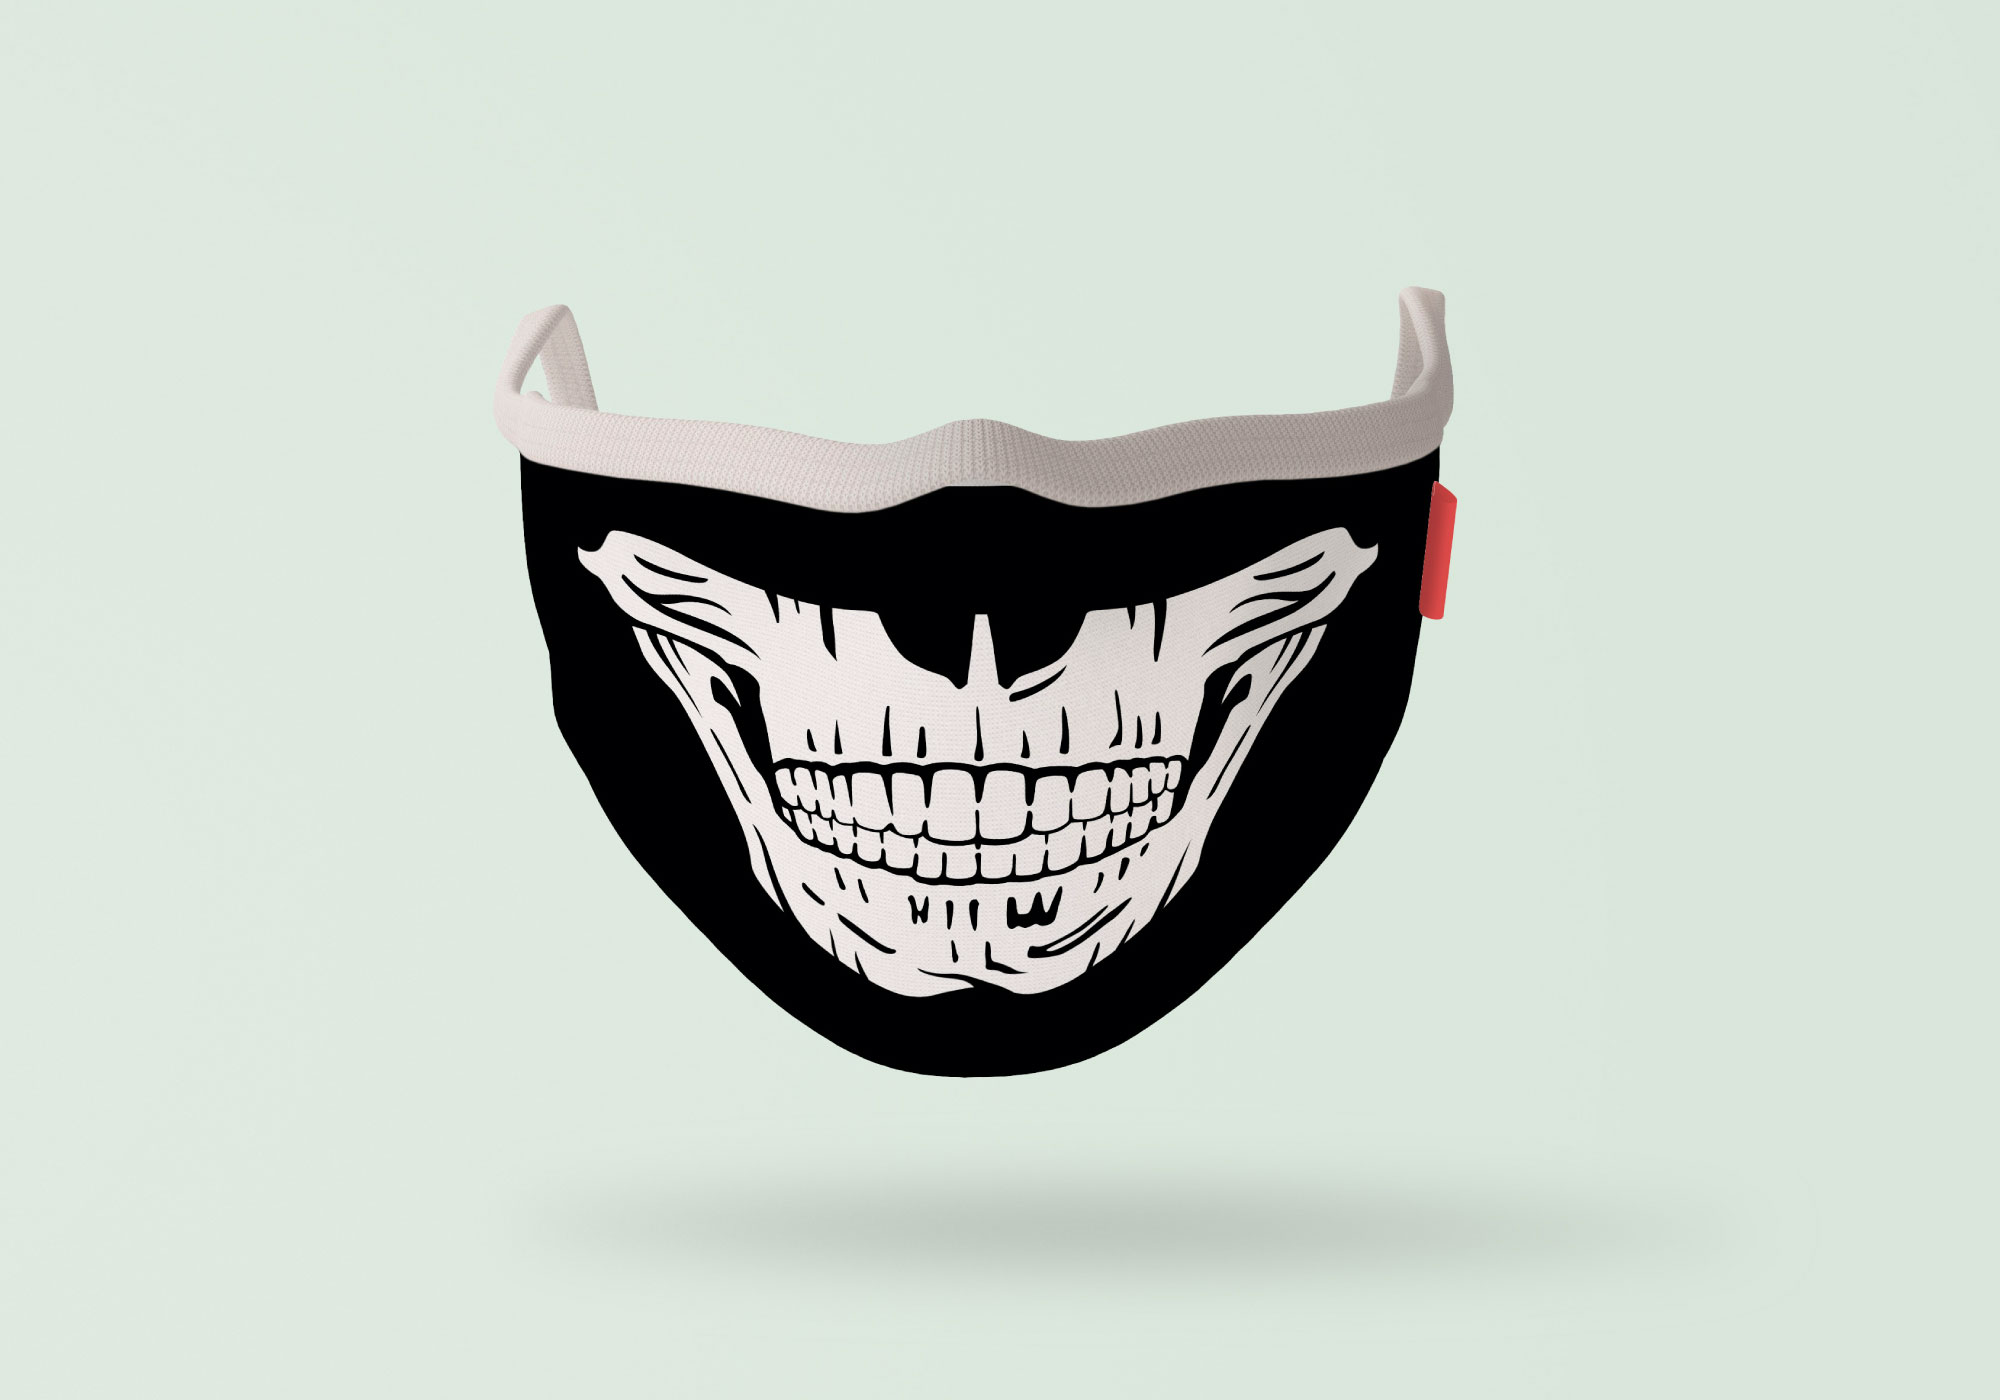 Download Free Face Mask Design Svgs